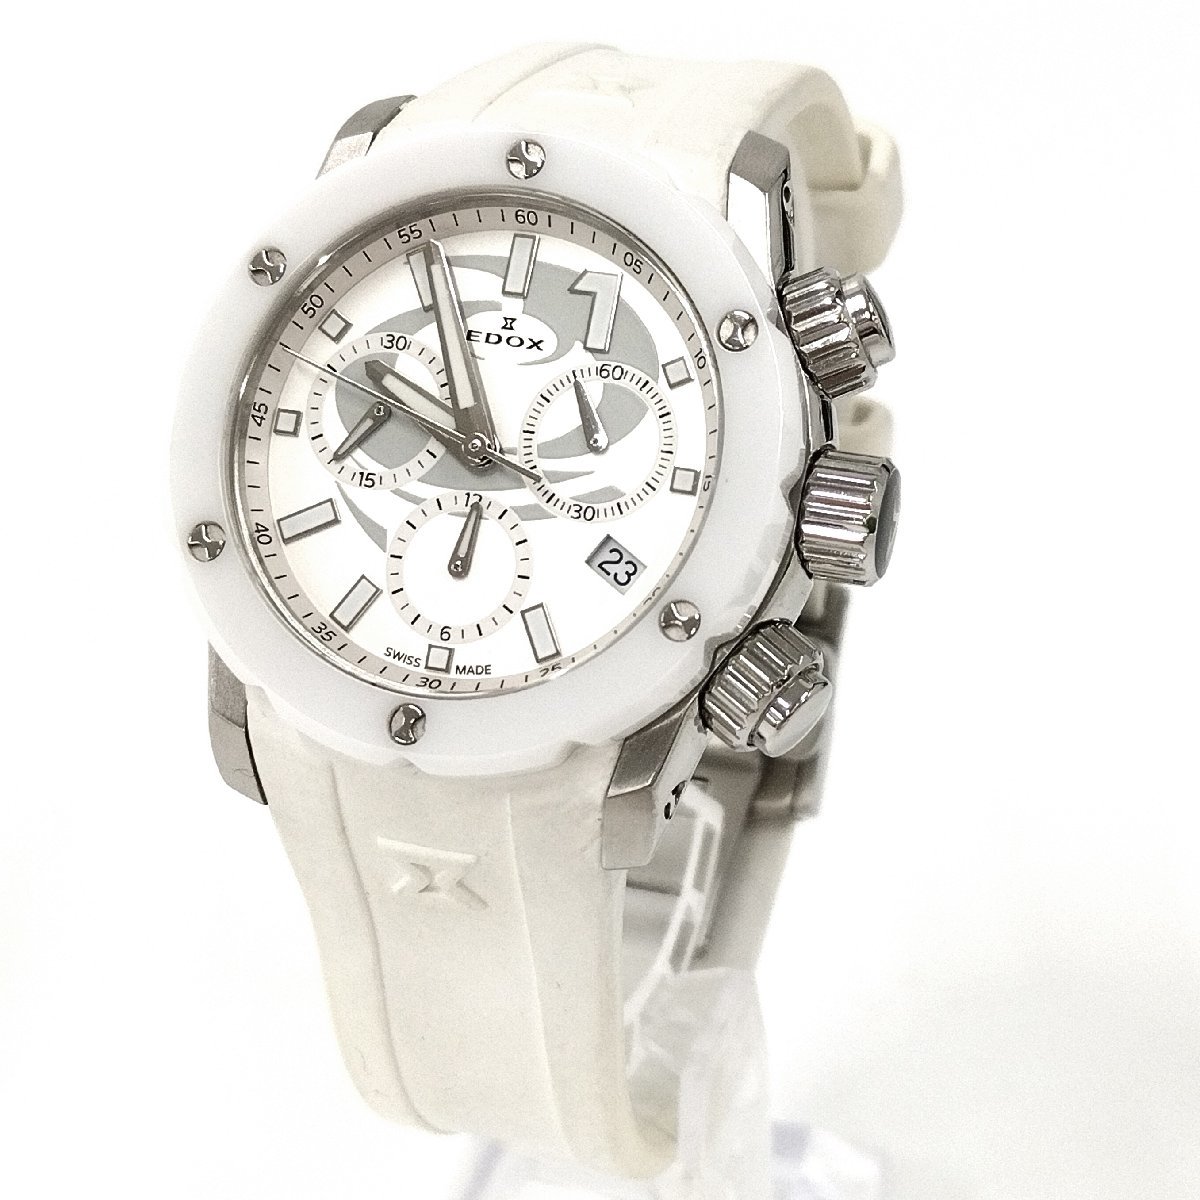 ●EDOX エドックス クロノオフショア カーリング協会モデル 10225 レディース腕時計 ホワイト文字盤 クォーツ クロノグラフ 中古[ne]u340